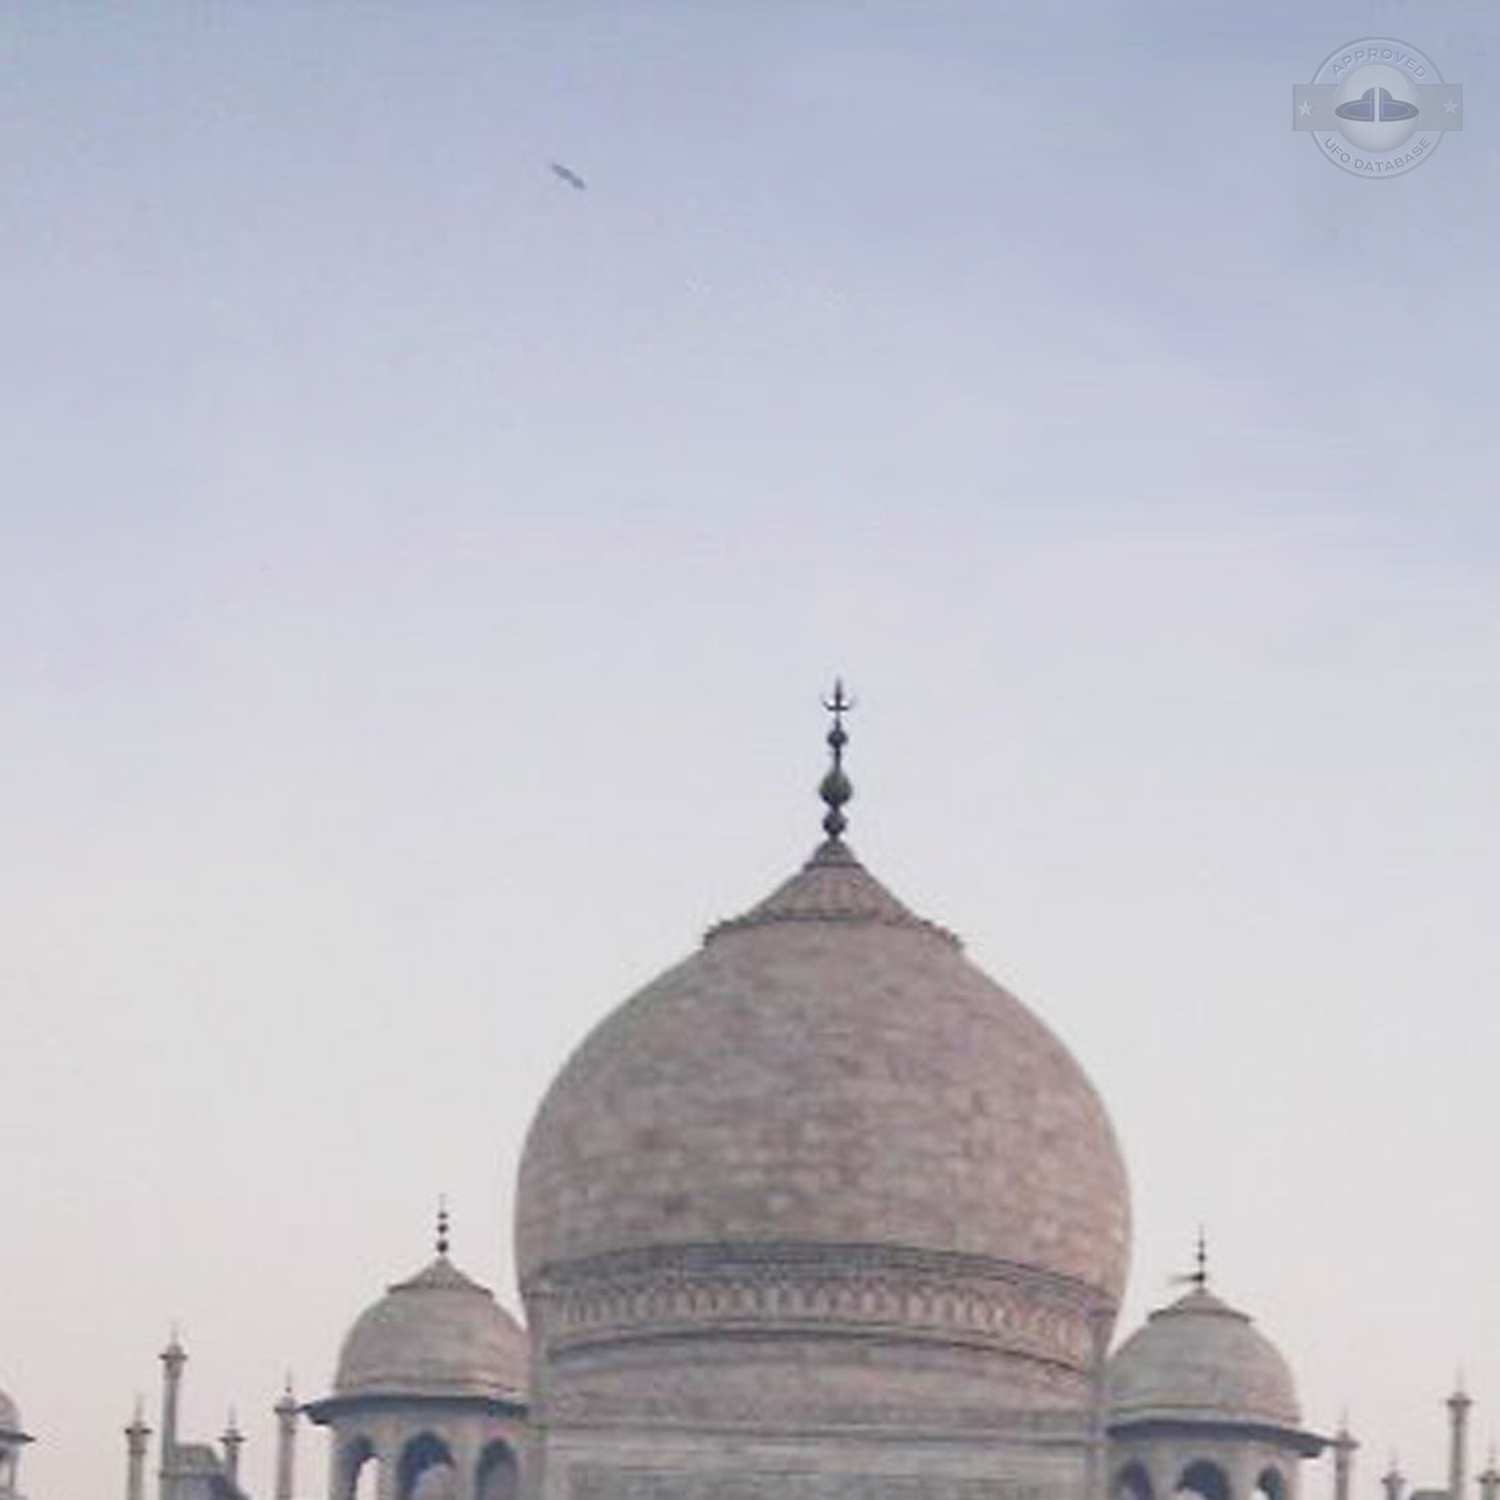 UFO over famous Taj Mahal | Agra, Uttar Pradesh | India UFO picture UFO Picture #186-2